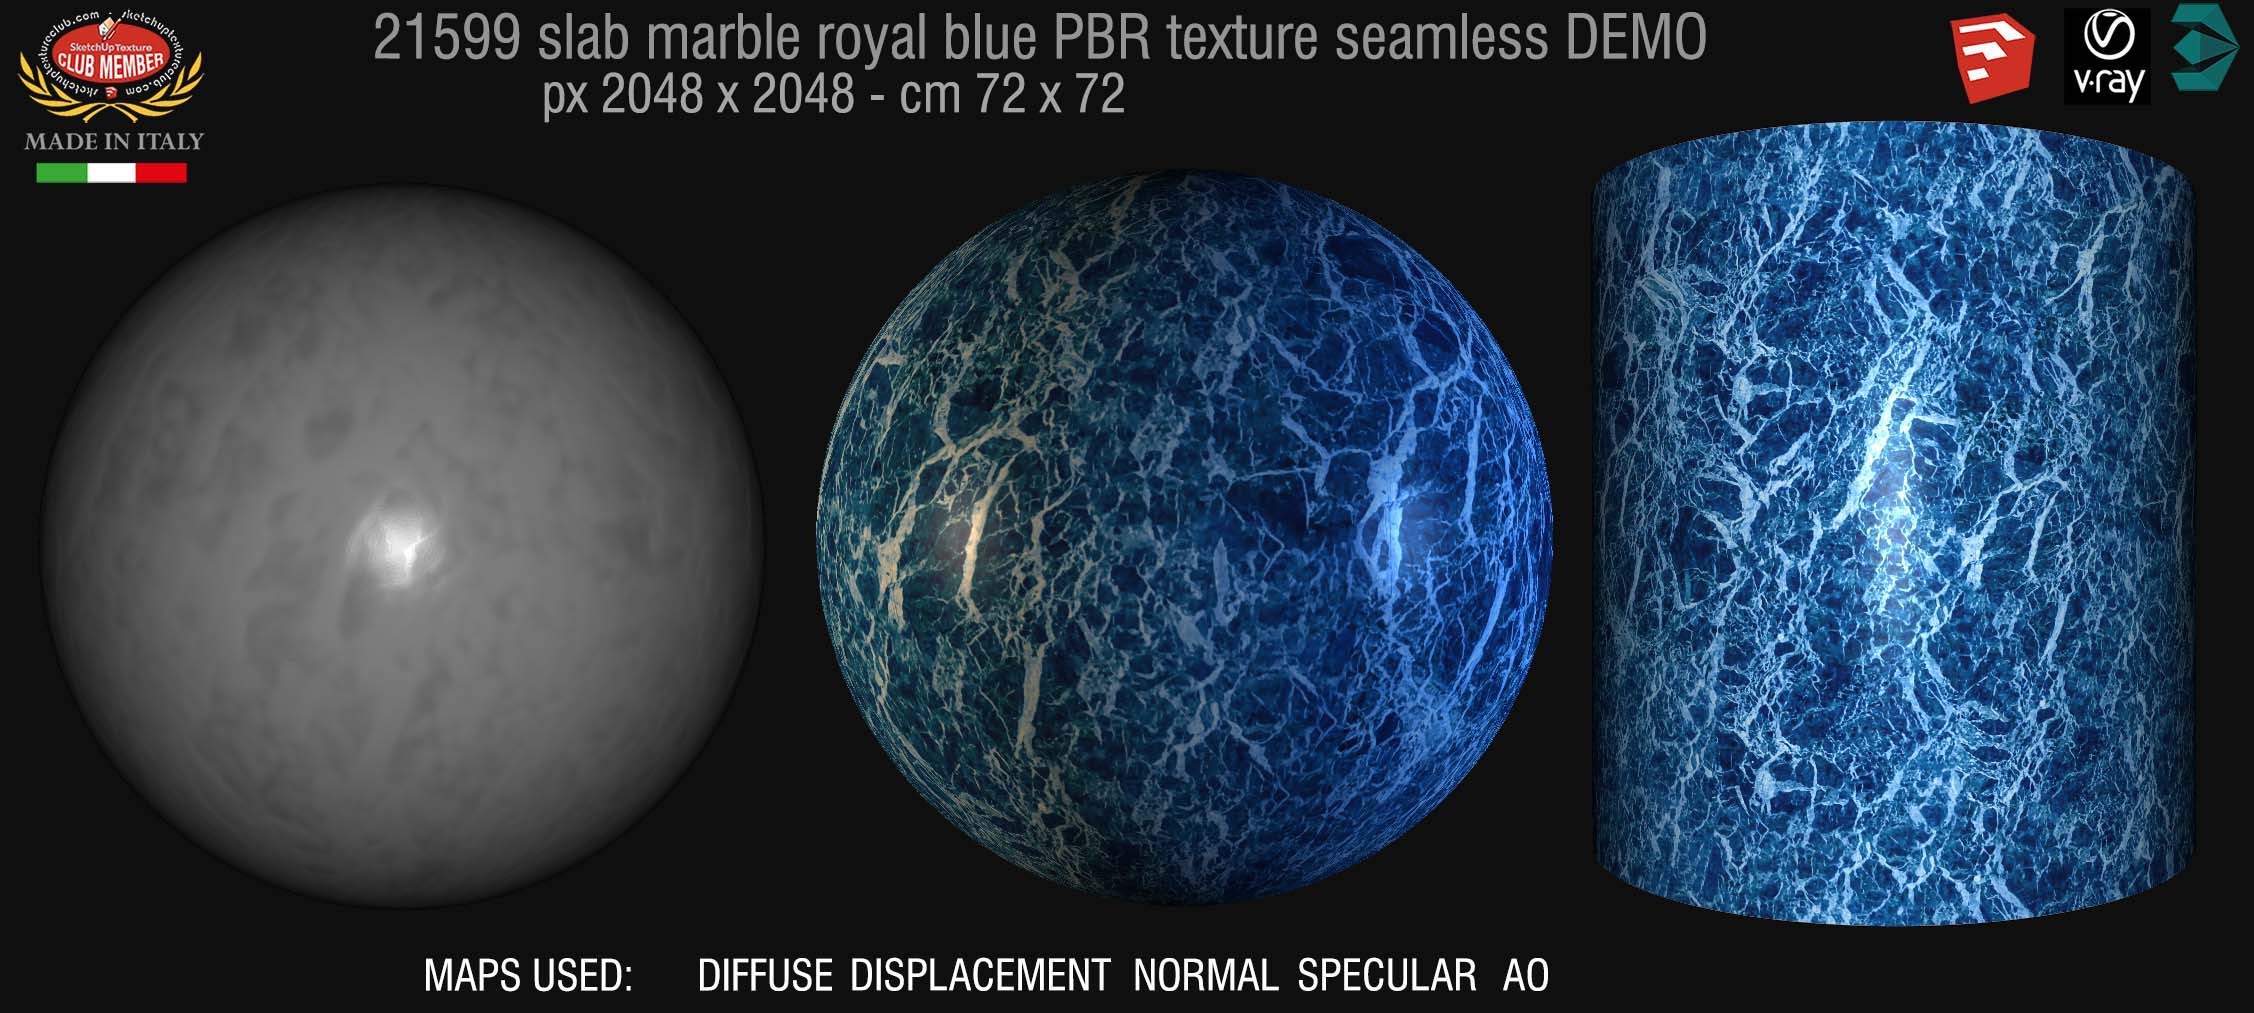 21599 slab marble royal blue PBR texture seamless DEMO